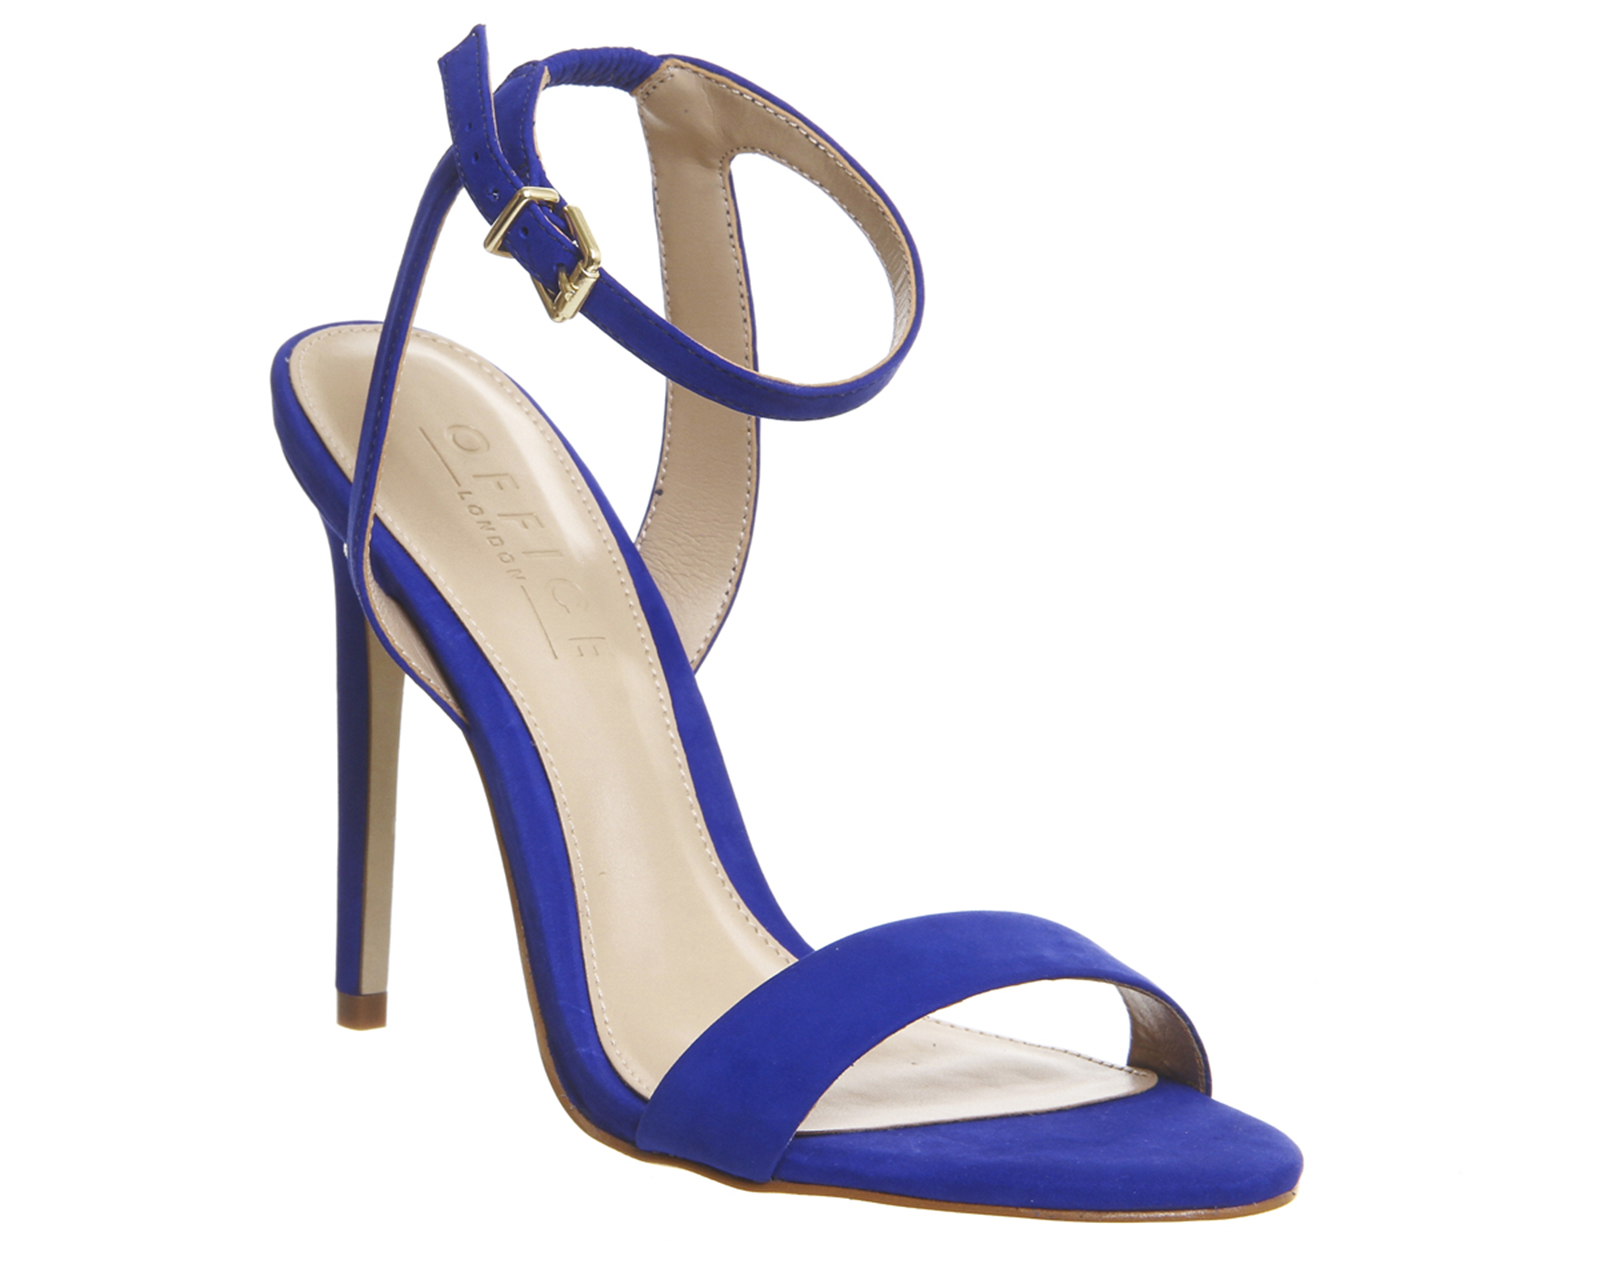 royal blue sandals